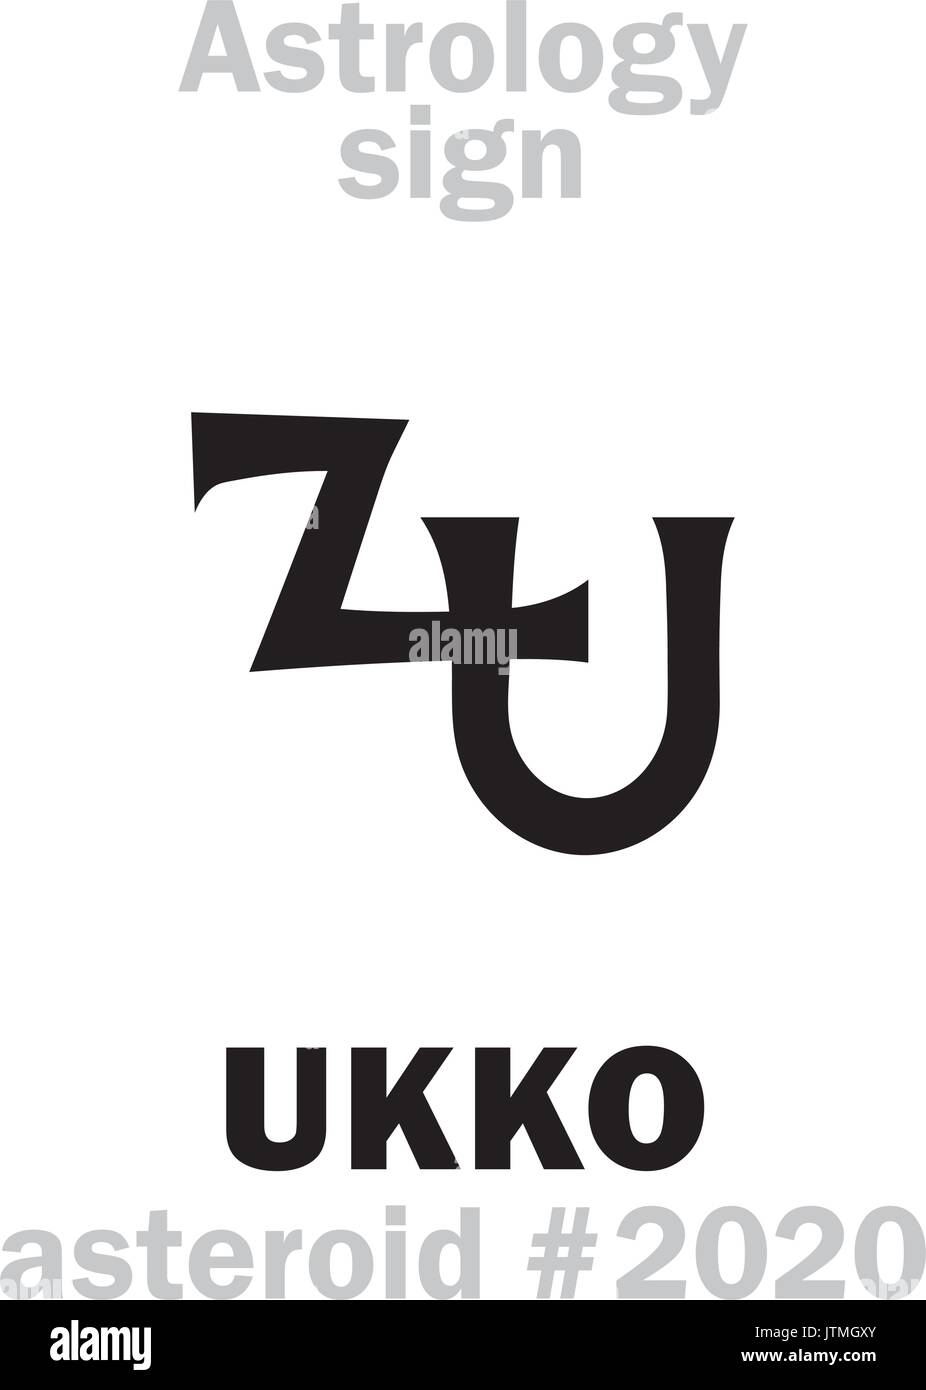 Astrology Alphabet: UKKO, asteroid #2020. Hieroglyphics character sign (single symbol). Stock Vector